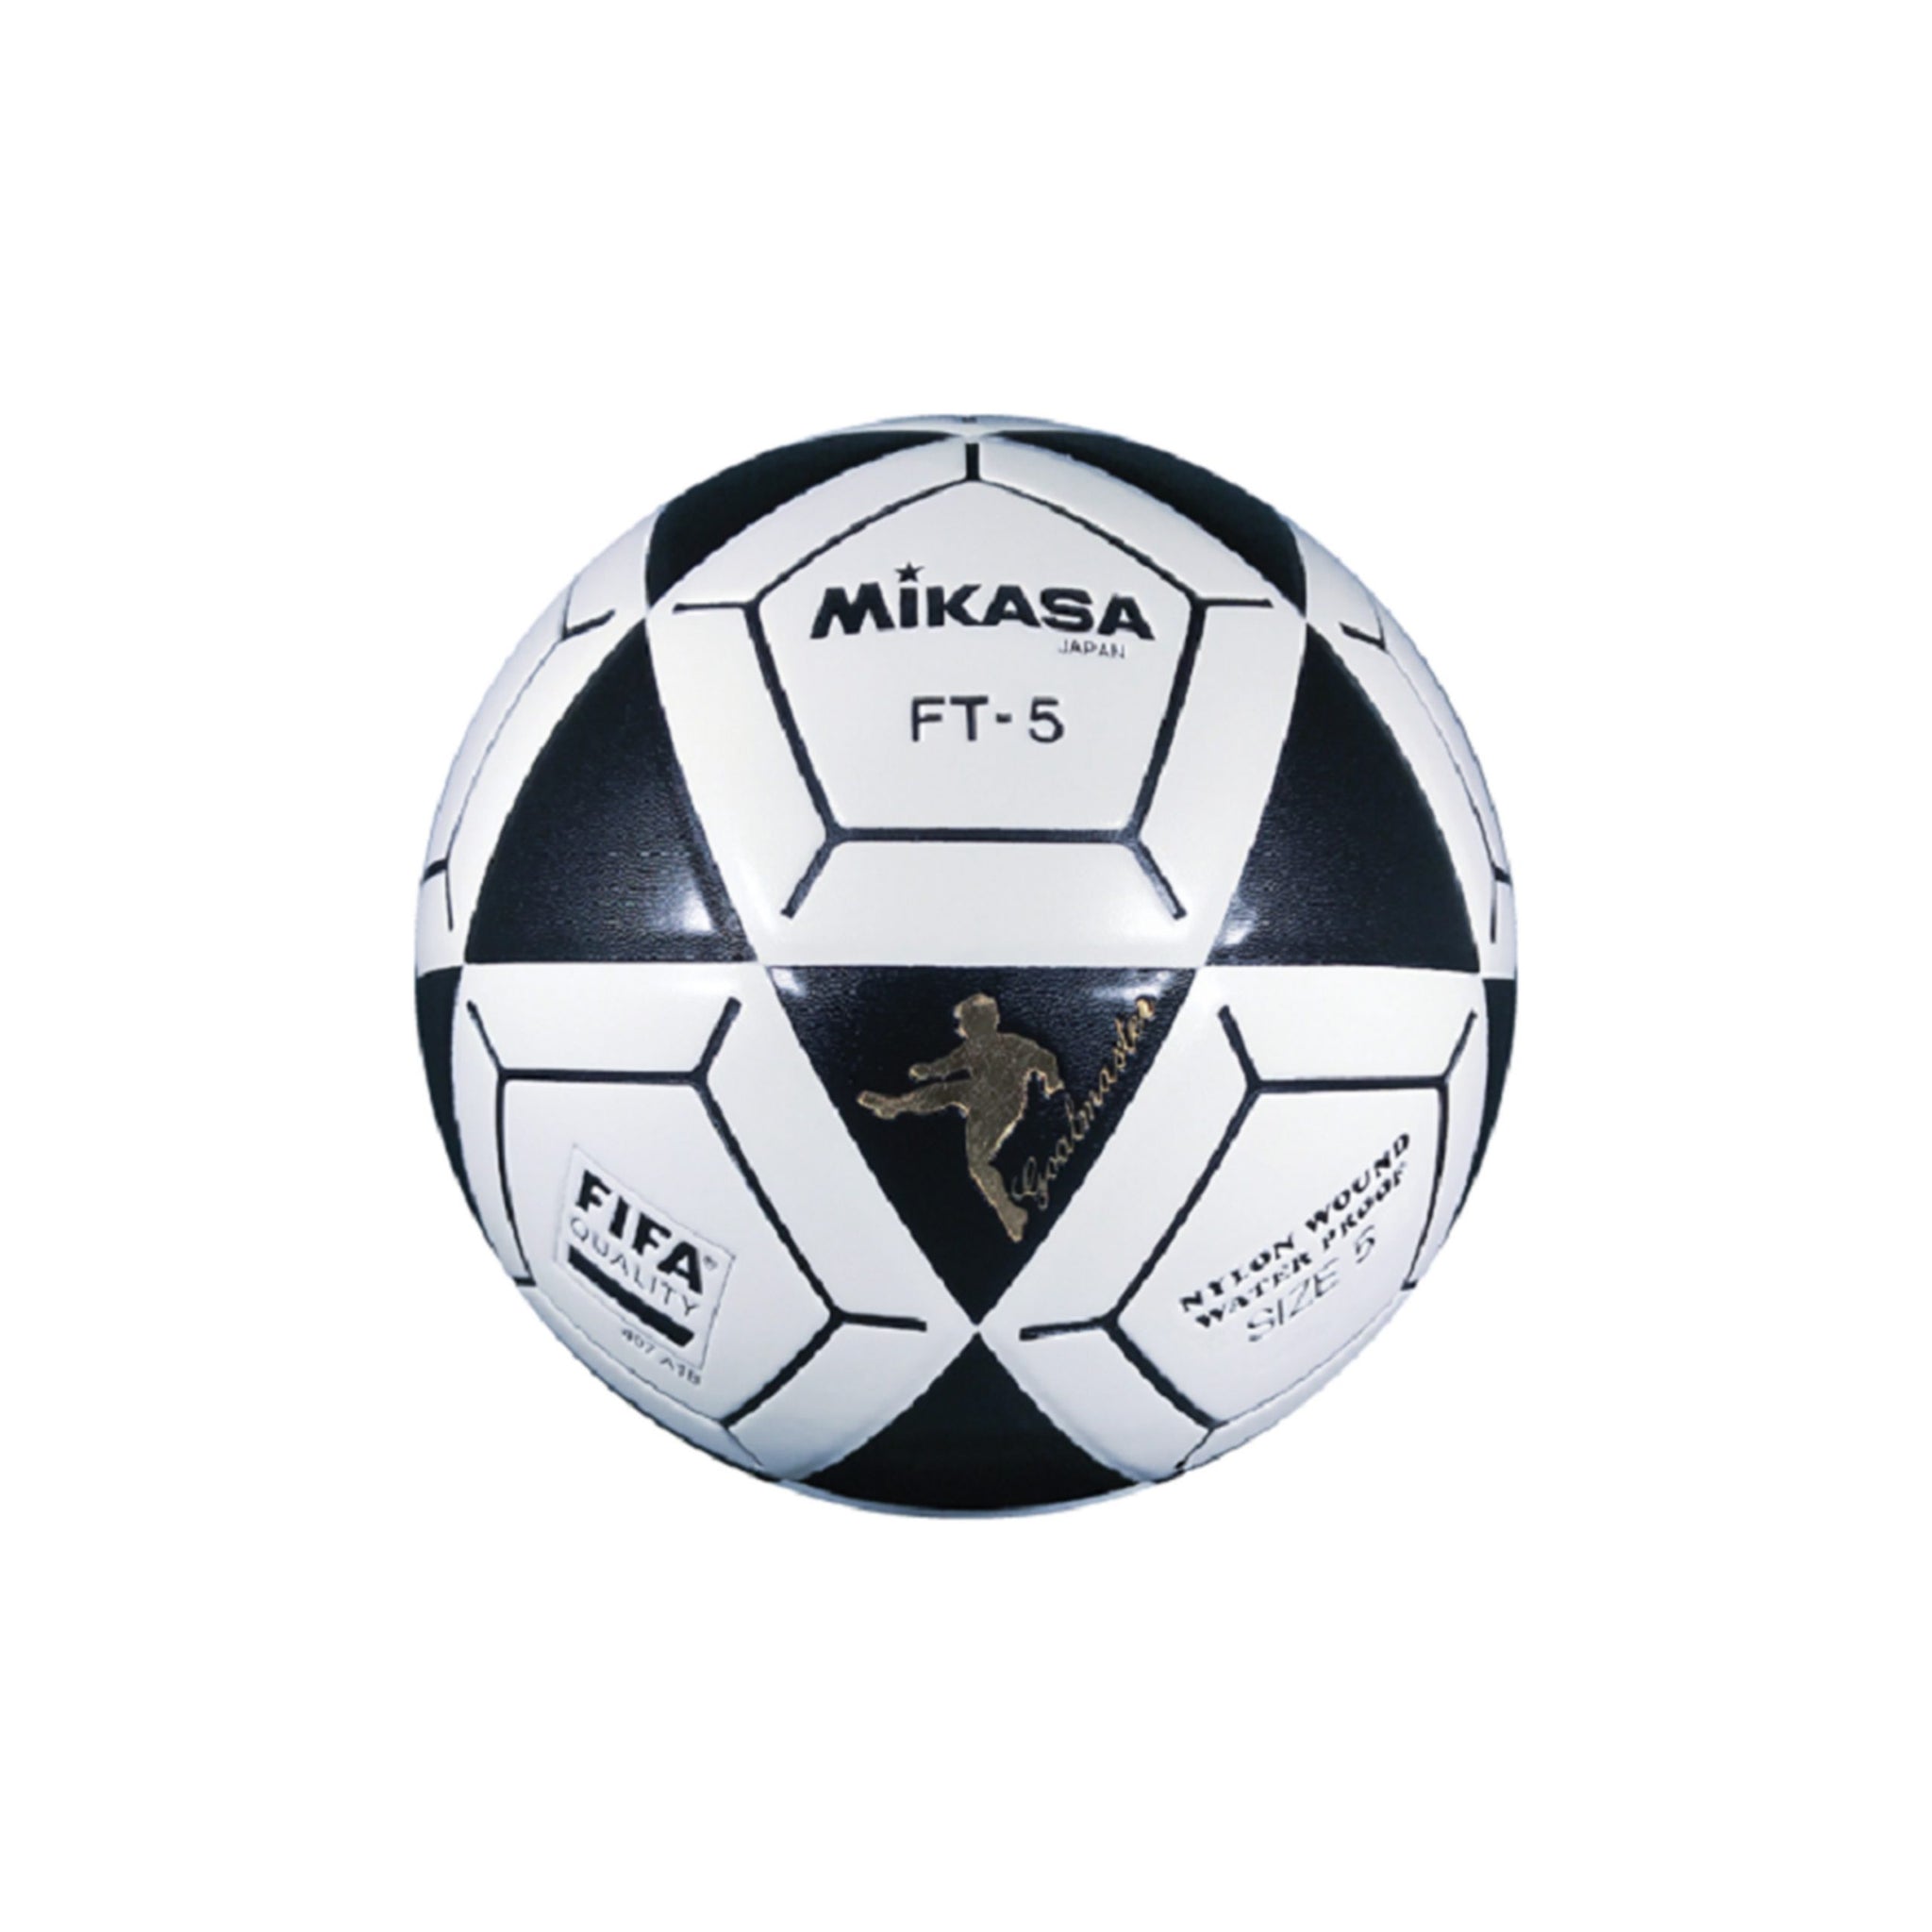 MIKASA FT - 5A Ball (White & Black)